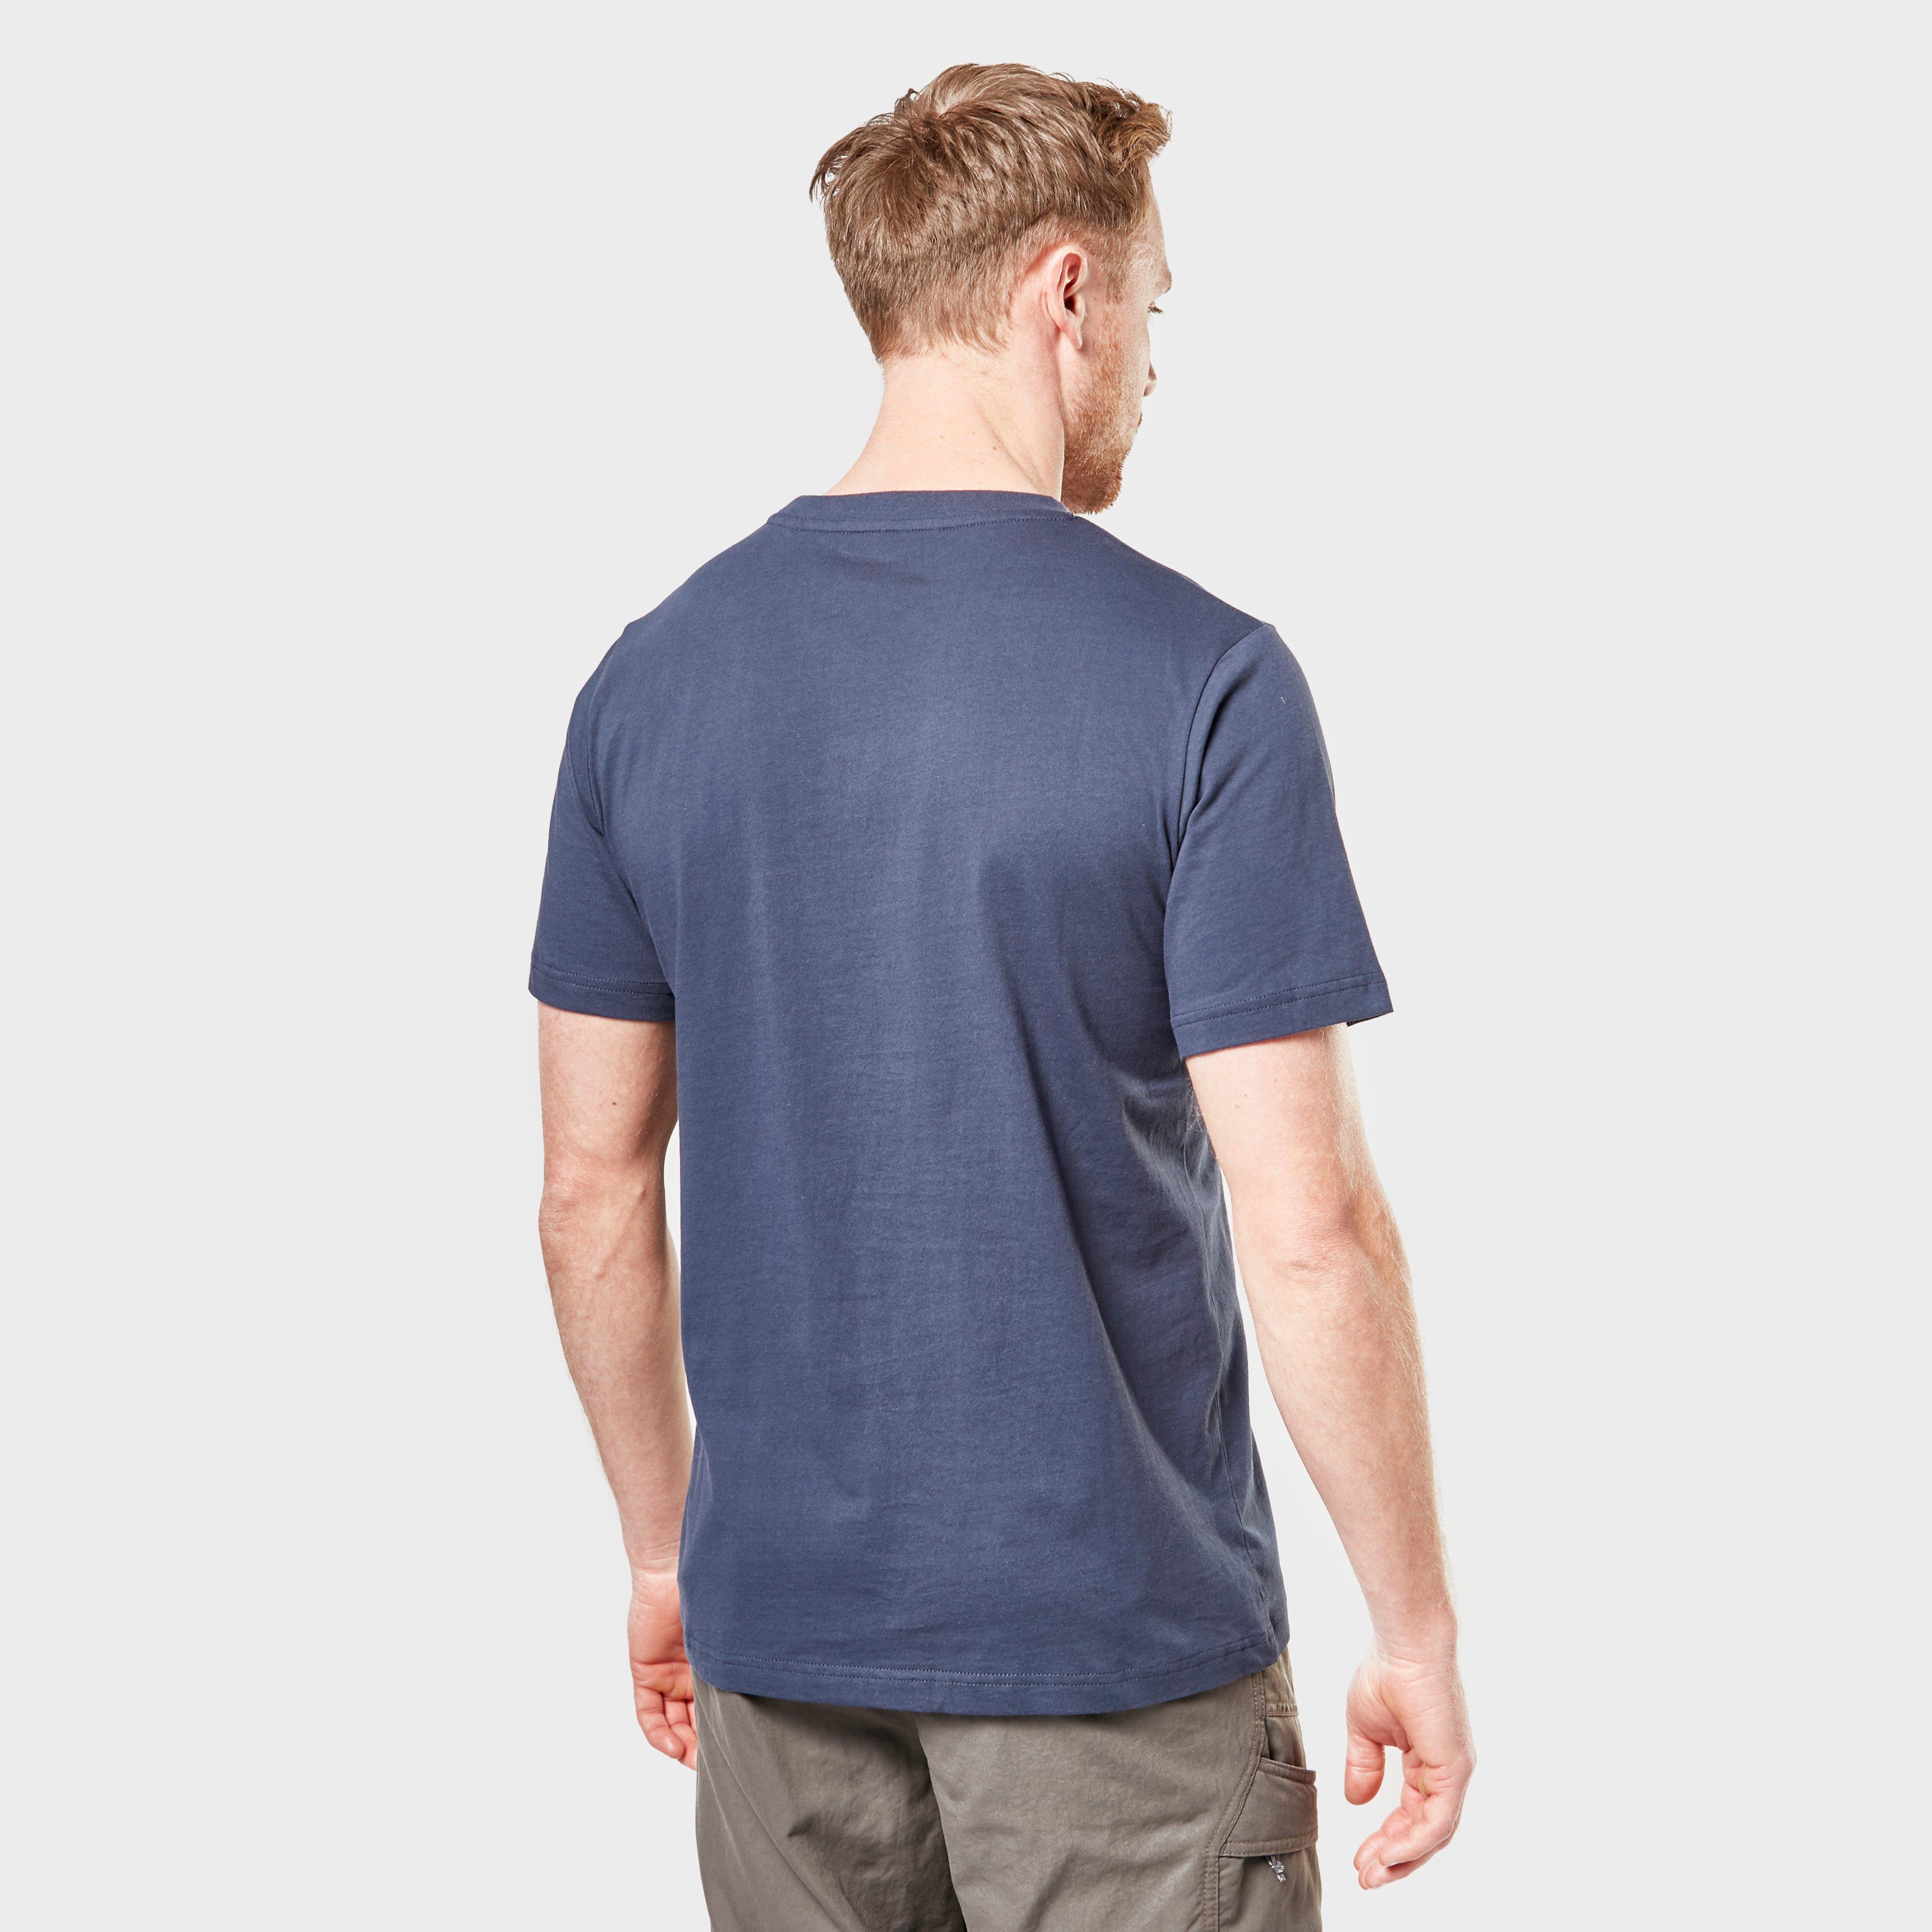 Berghaus Men’s Corporate Logo T-Shirt Review